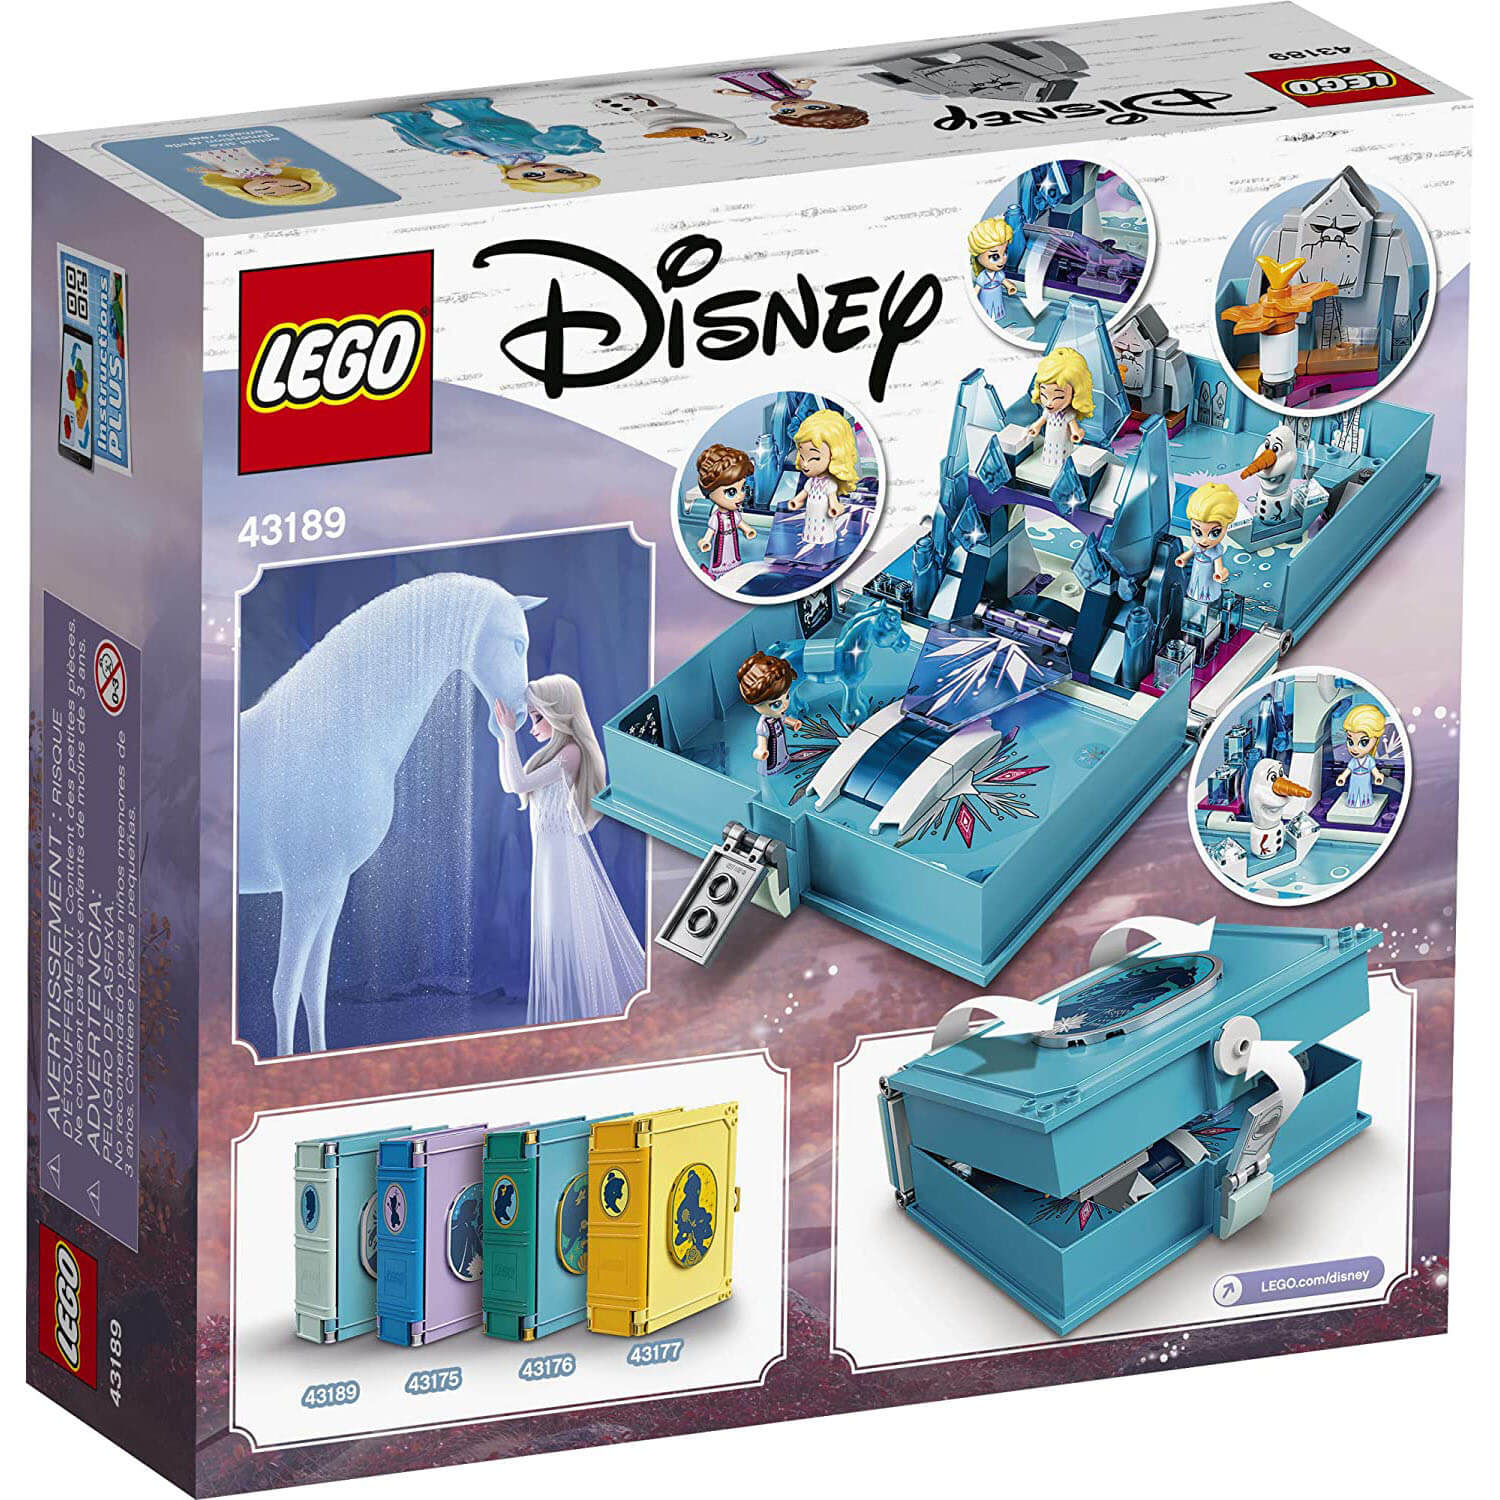 LEGO Disney Princess Elsa and the Nokk Storybook Adventures 125 Piece Building Set (43189)